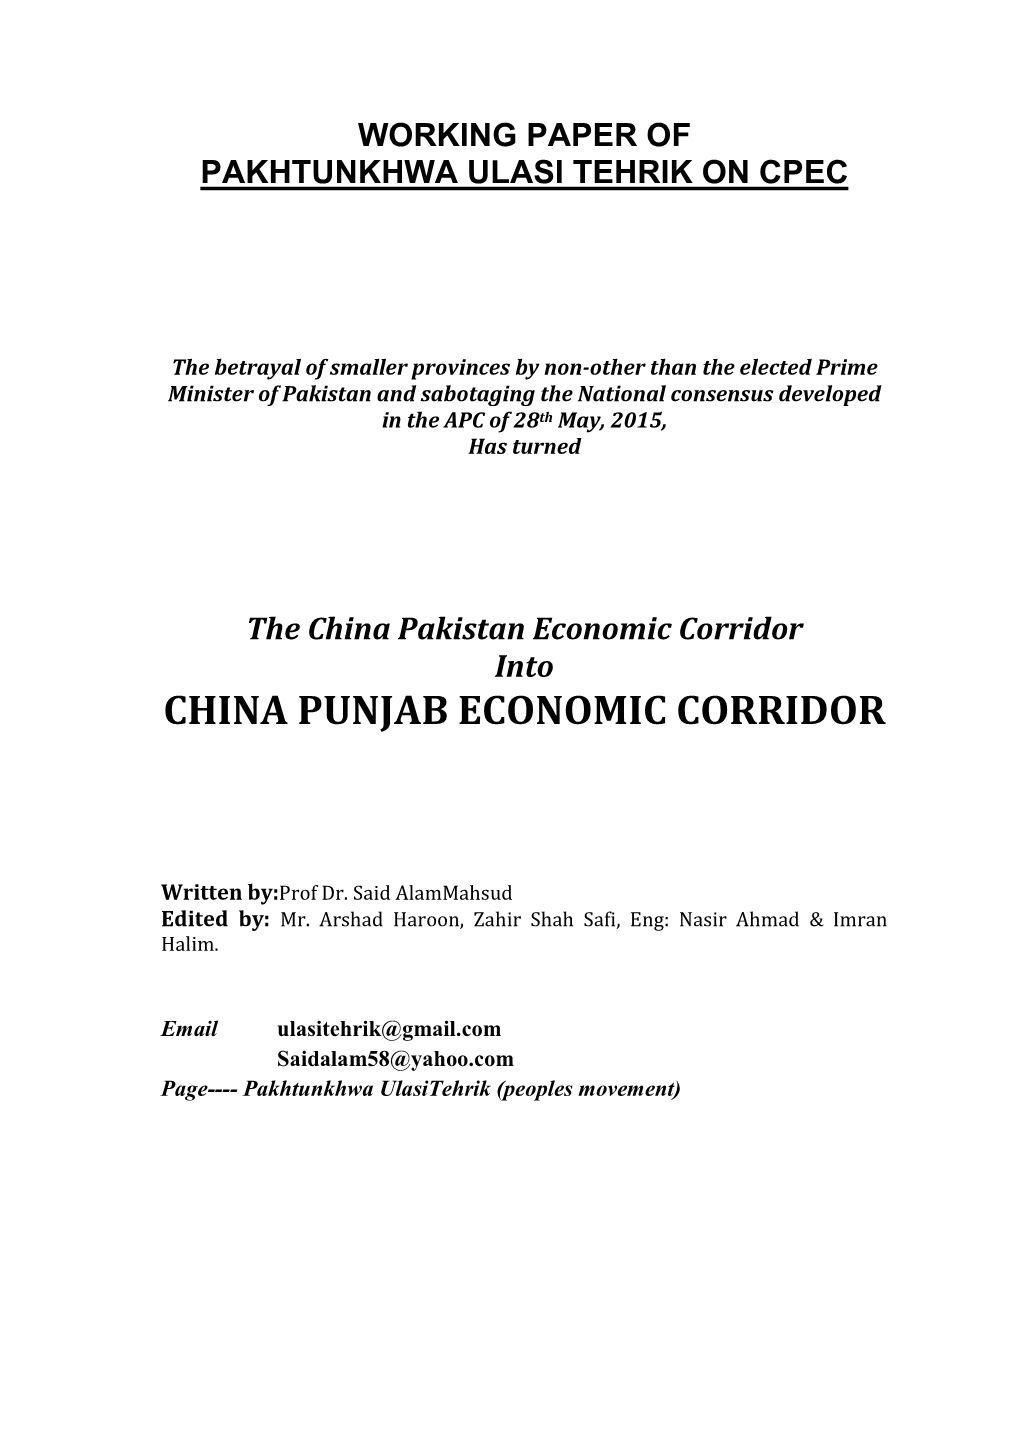 China Punjab Economic Corridor